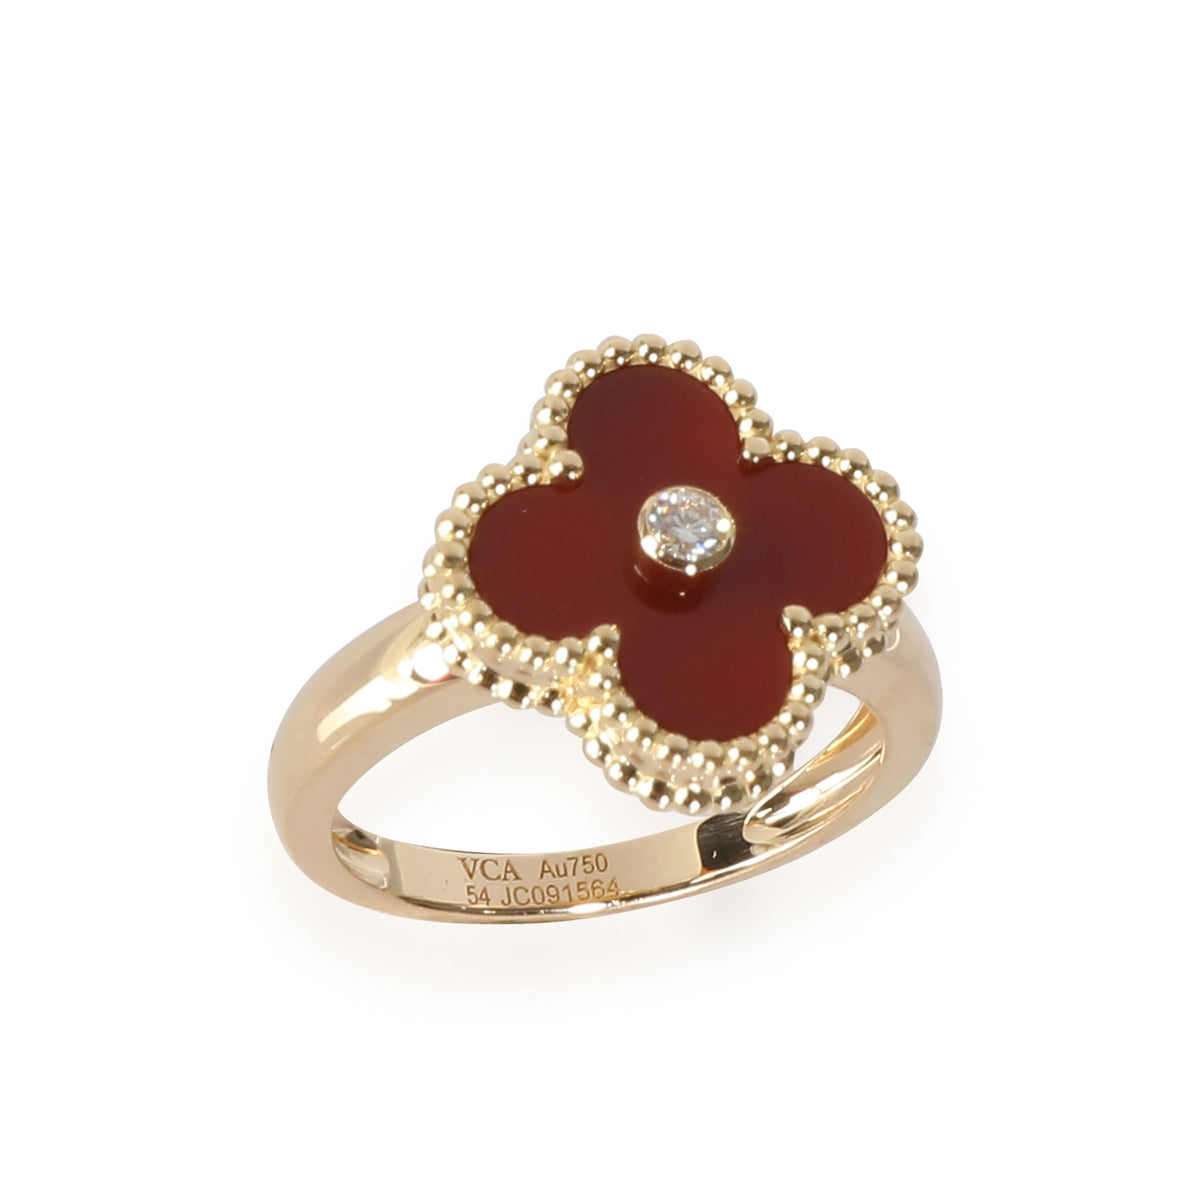 Van Cleef & Arpels Vintage Alhambra Carnelian Ring in 18K Yellow Gold 0.05 CTW